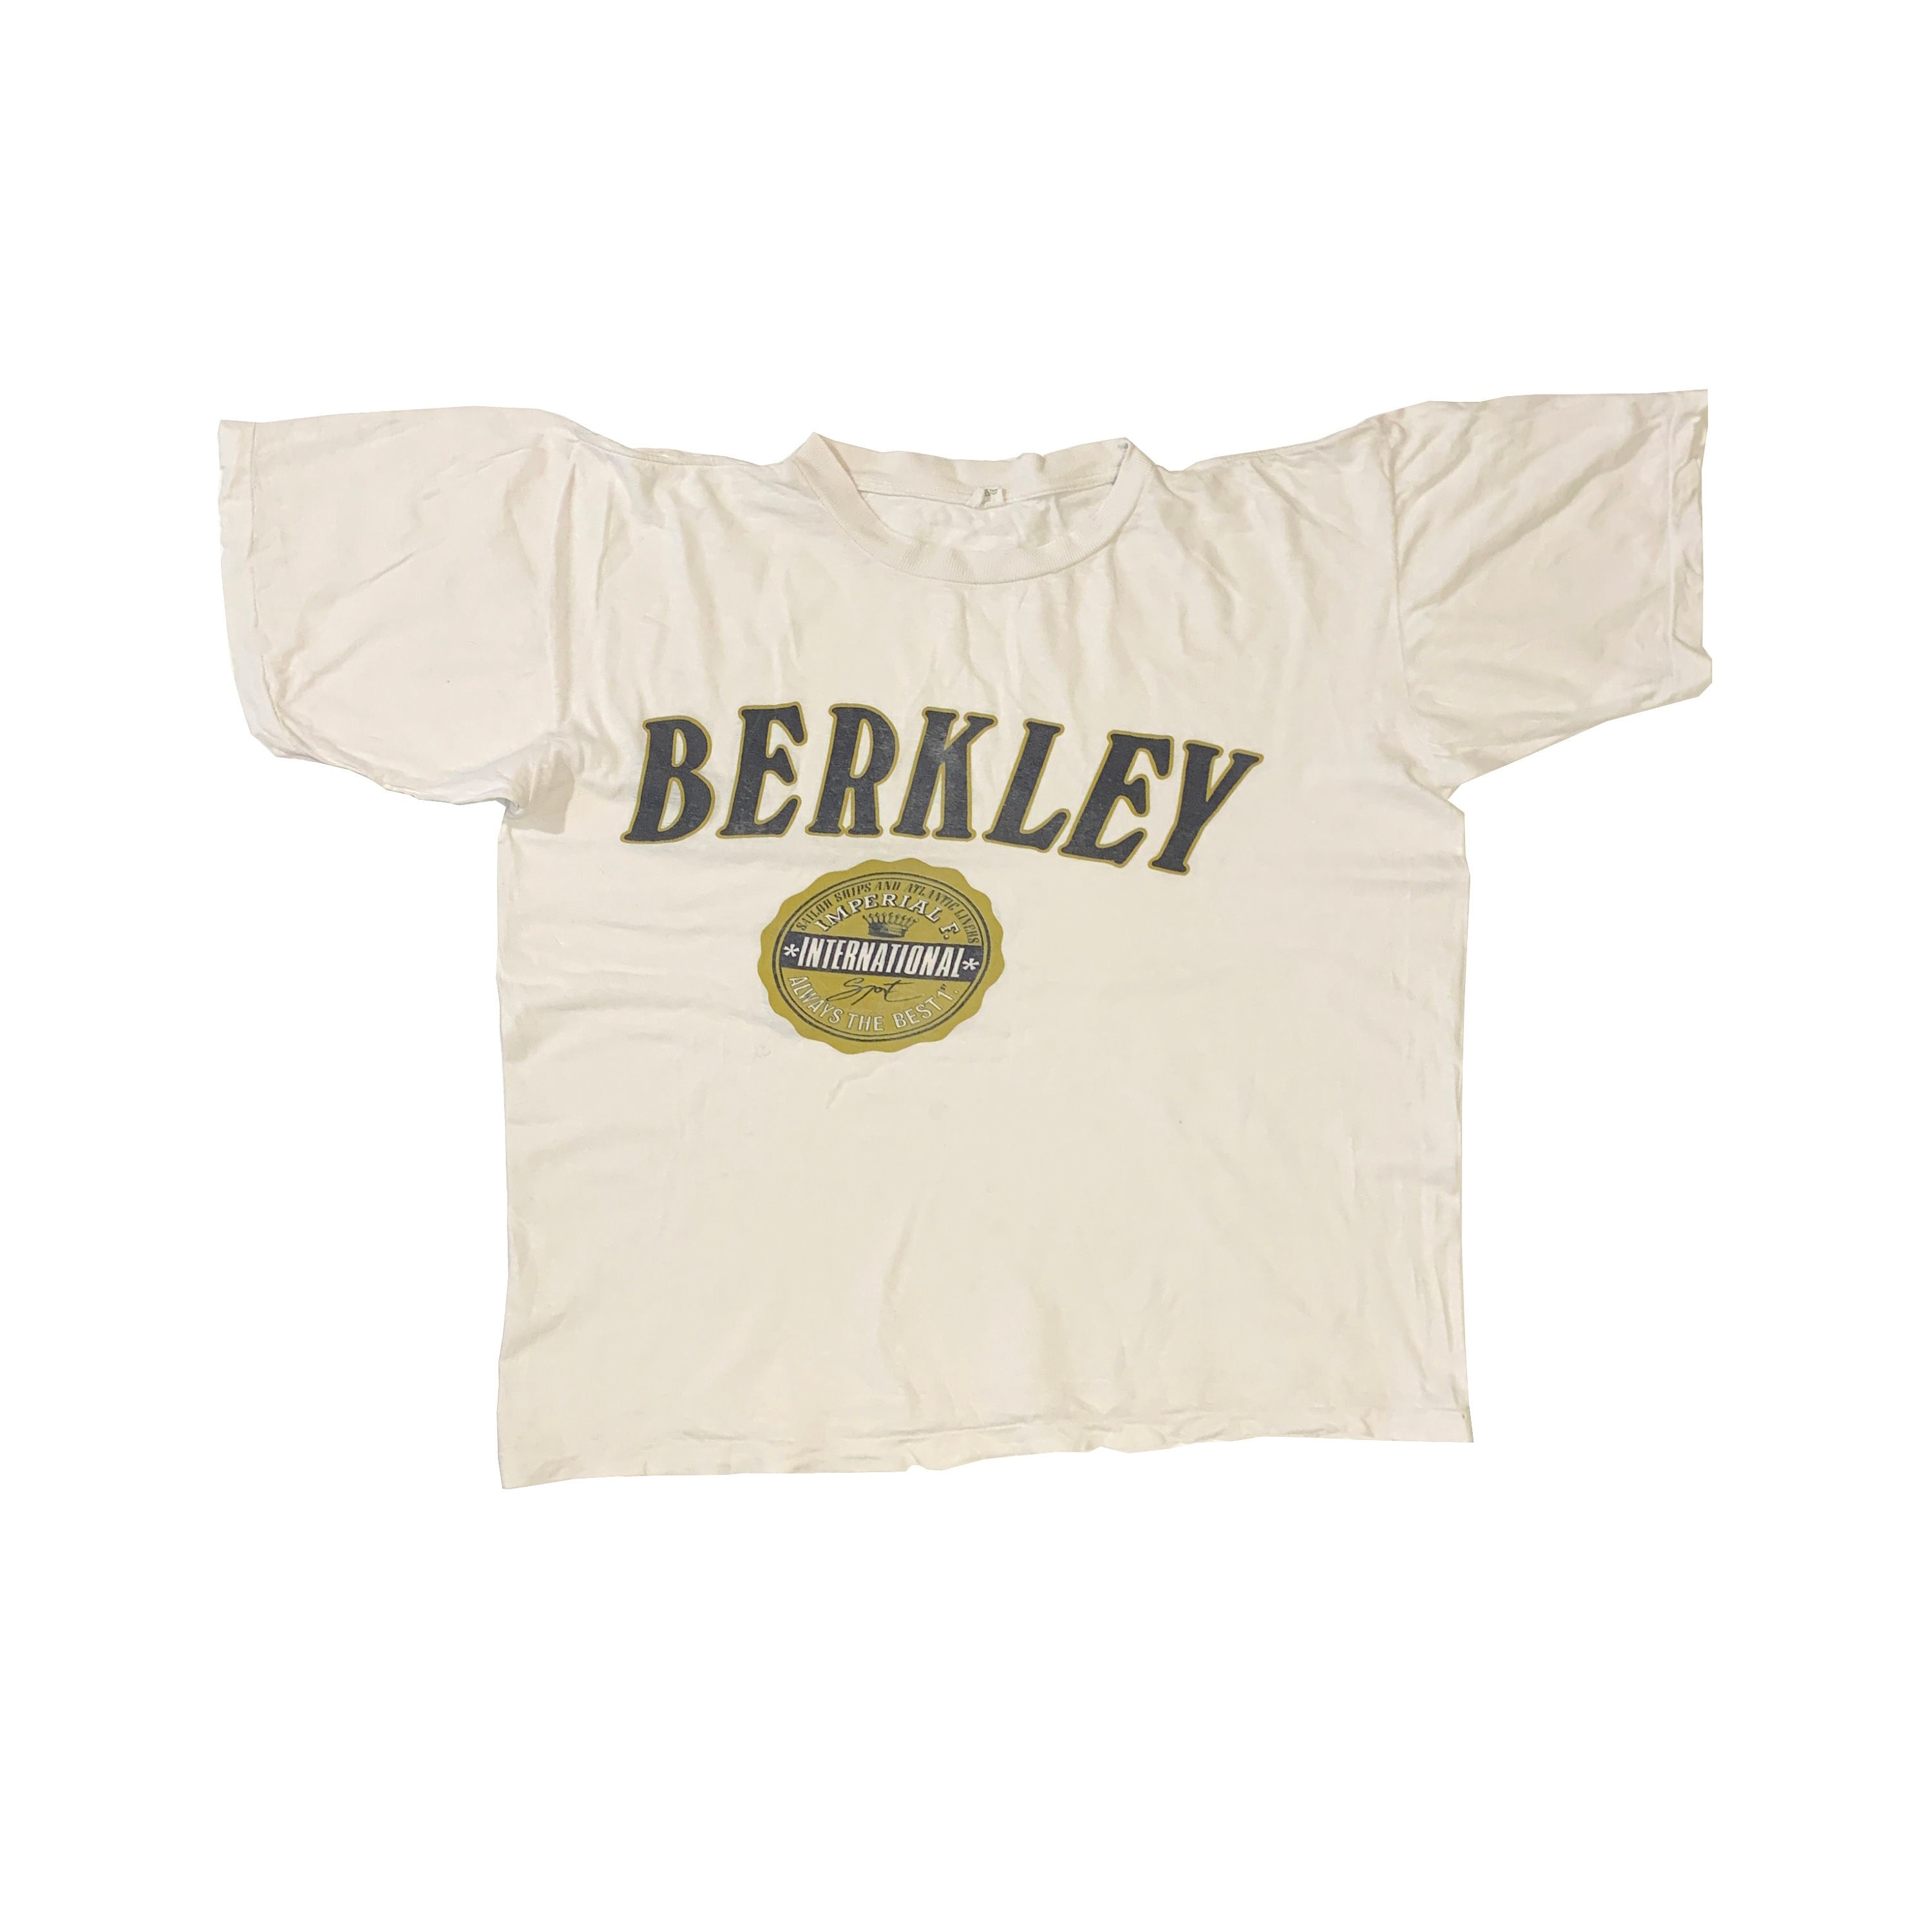 vintage berkley shirts ruffle shirt